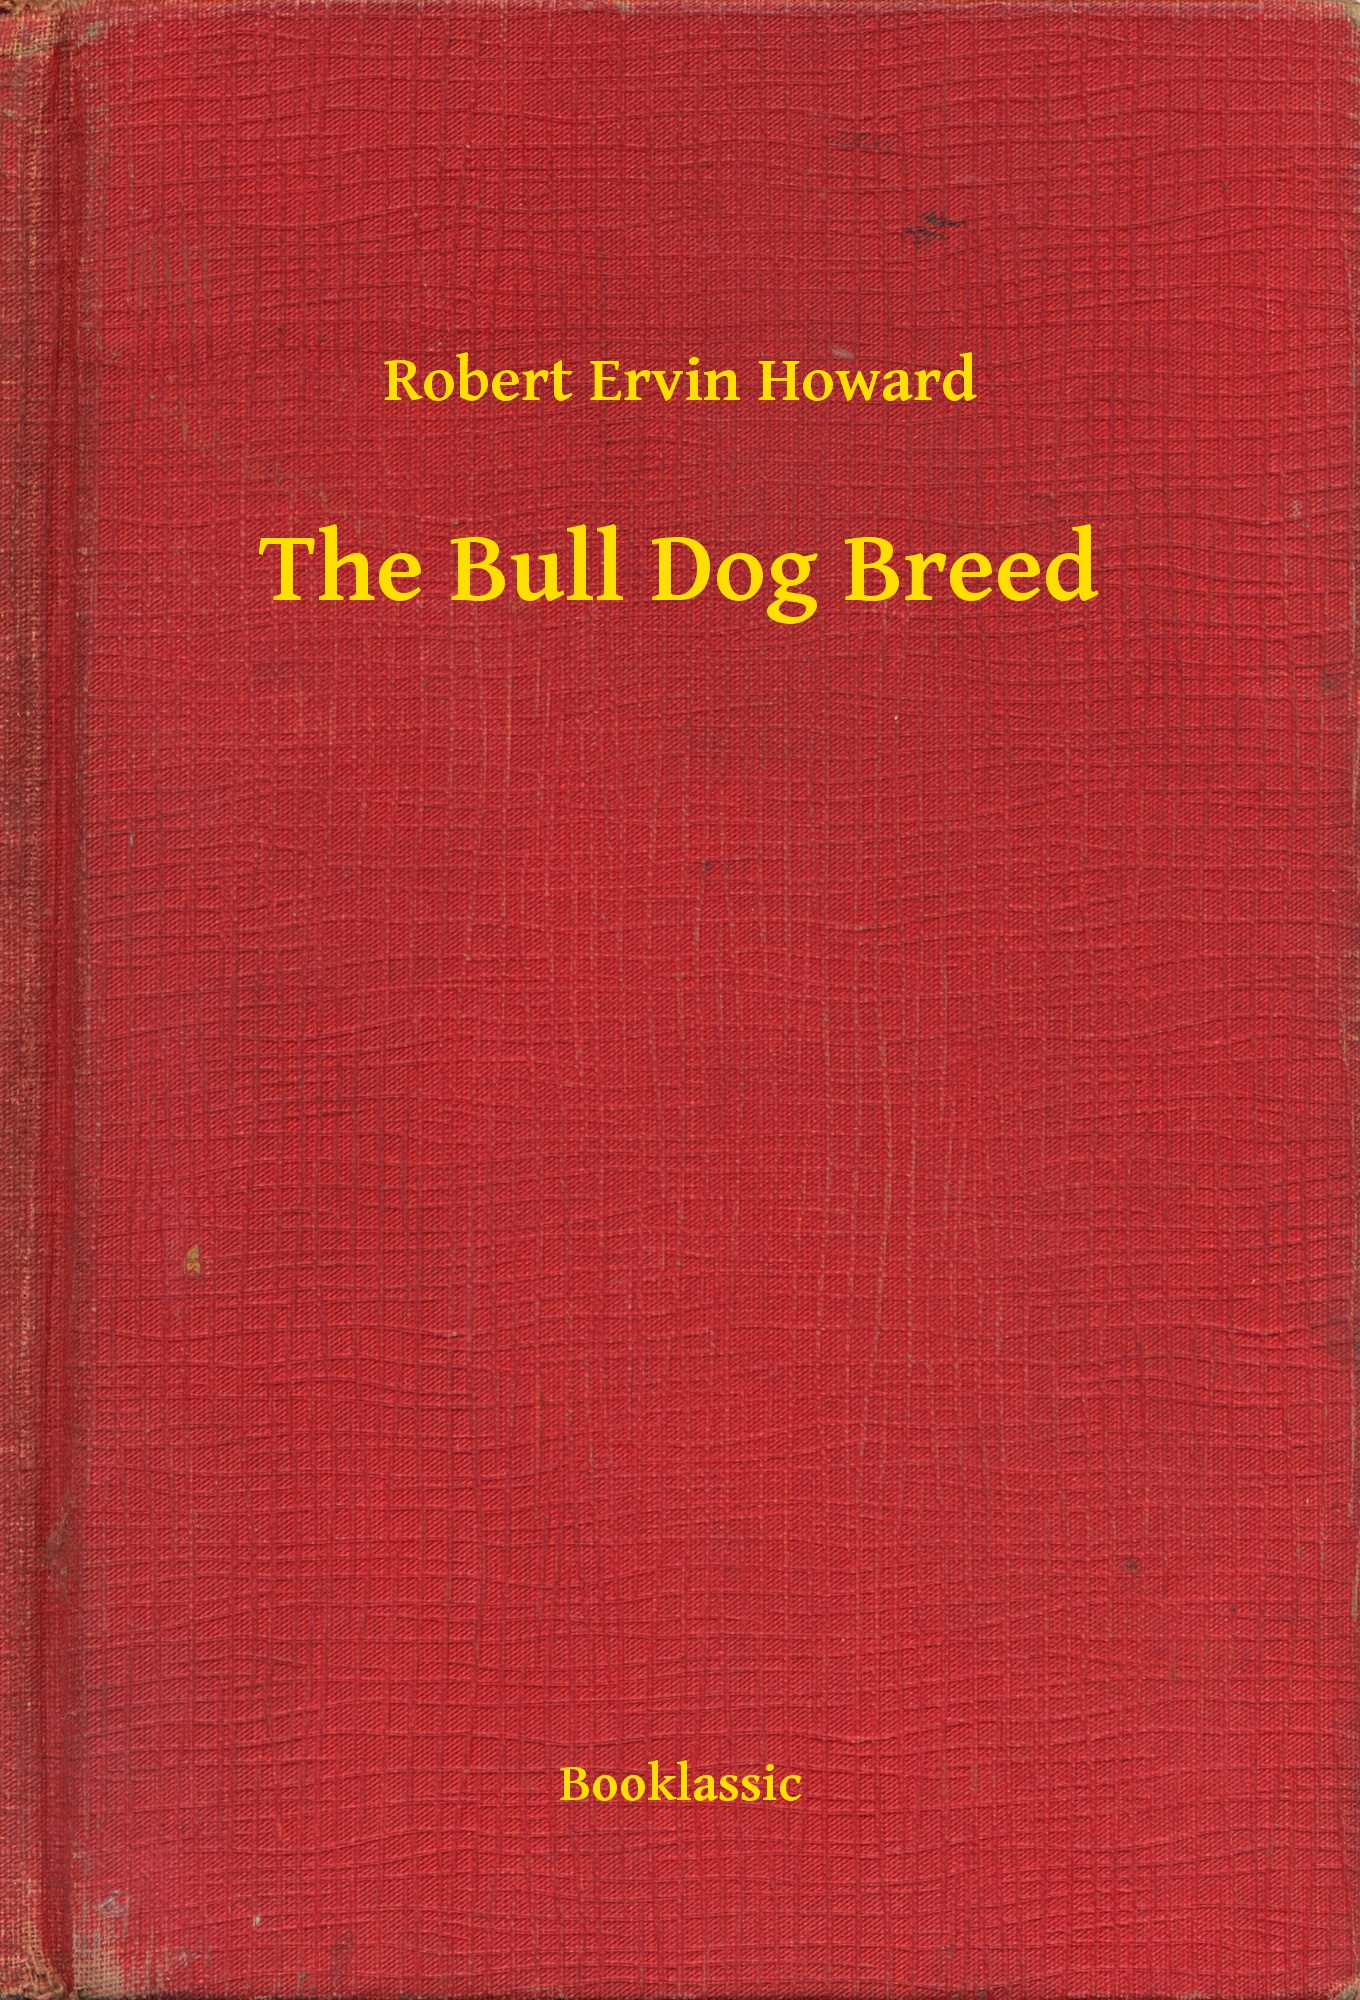 The Bull Dog Breed